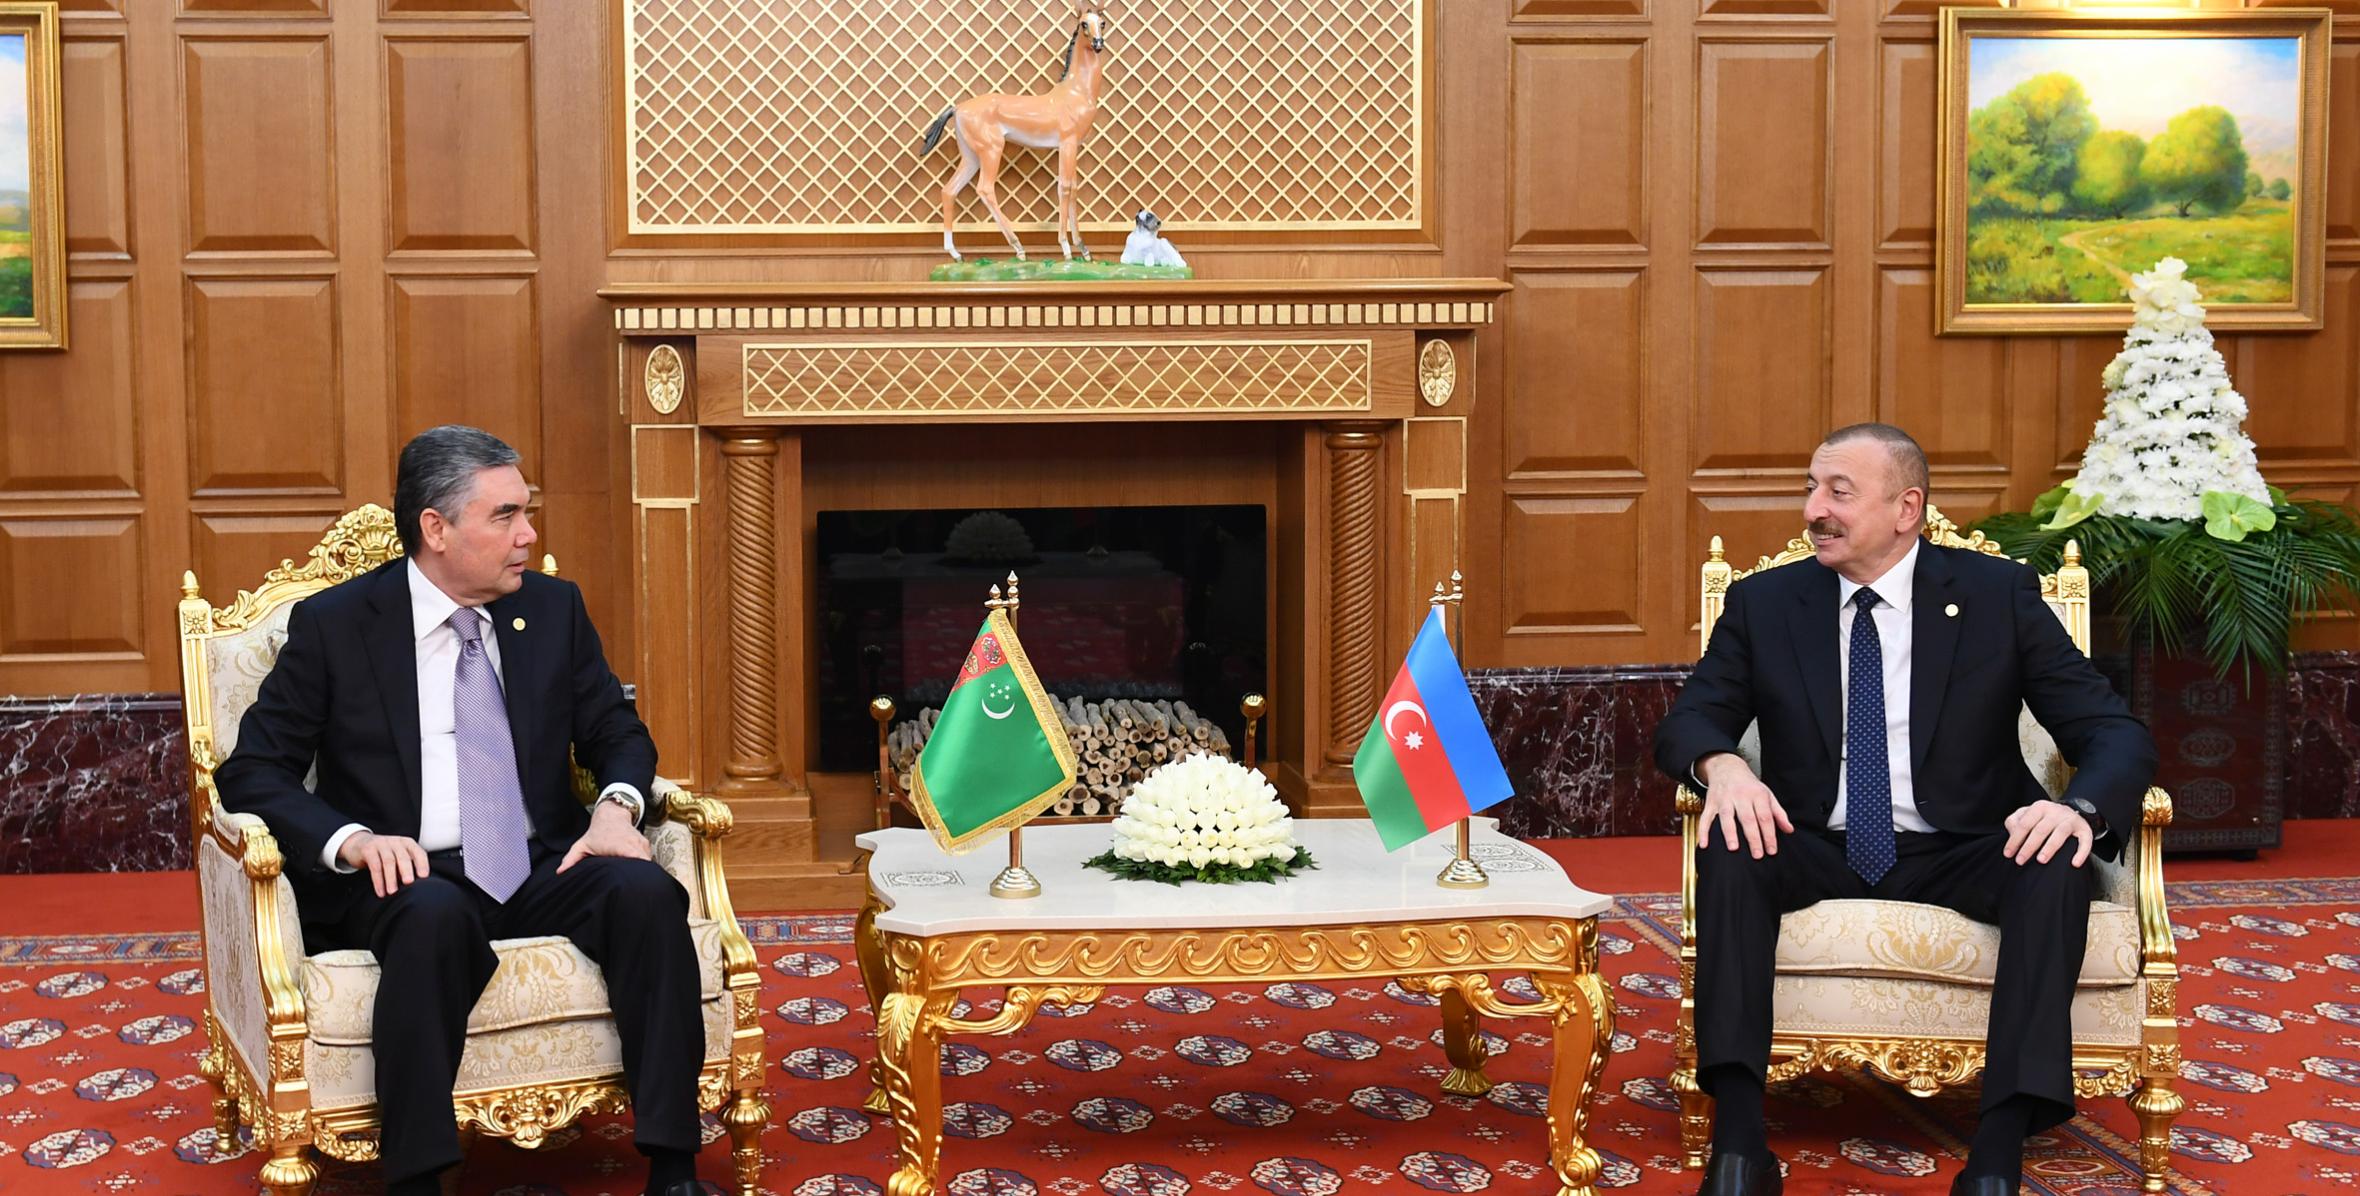 Ilham Aliyev met with President of Turkmenistan in Ashgabat